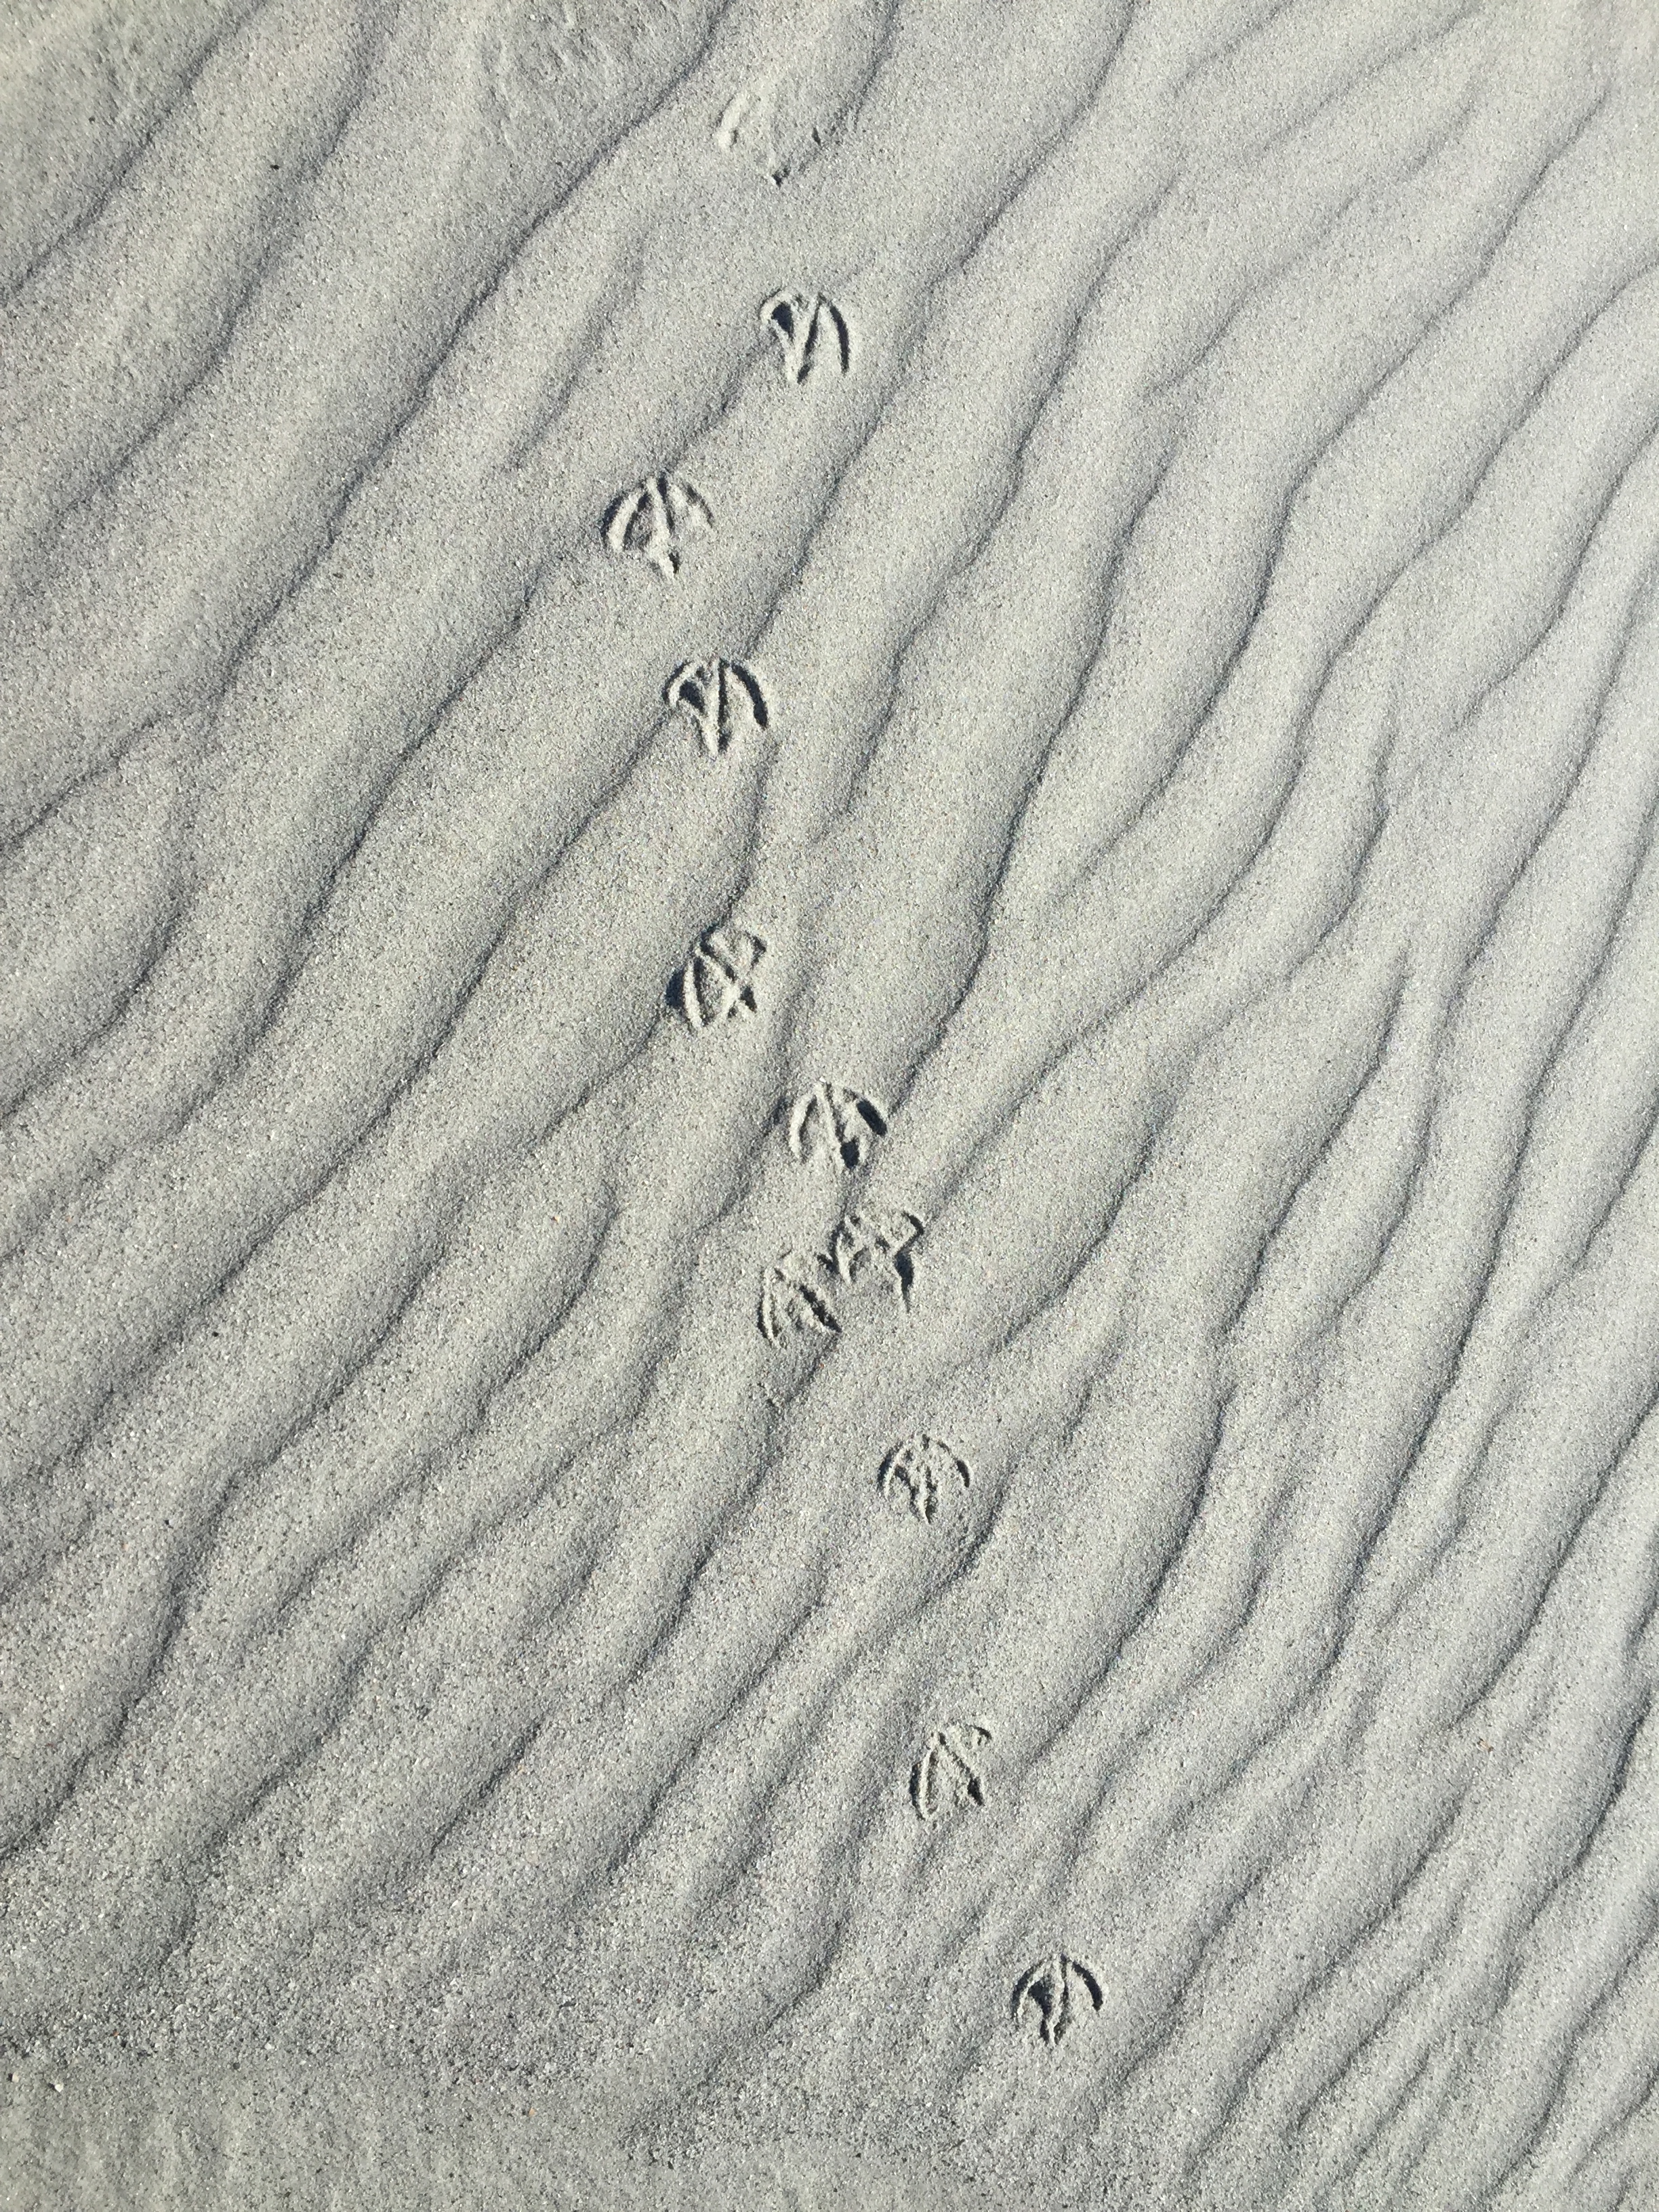 bird footprints in winter sand